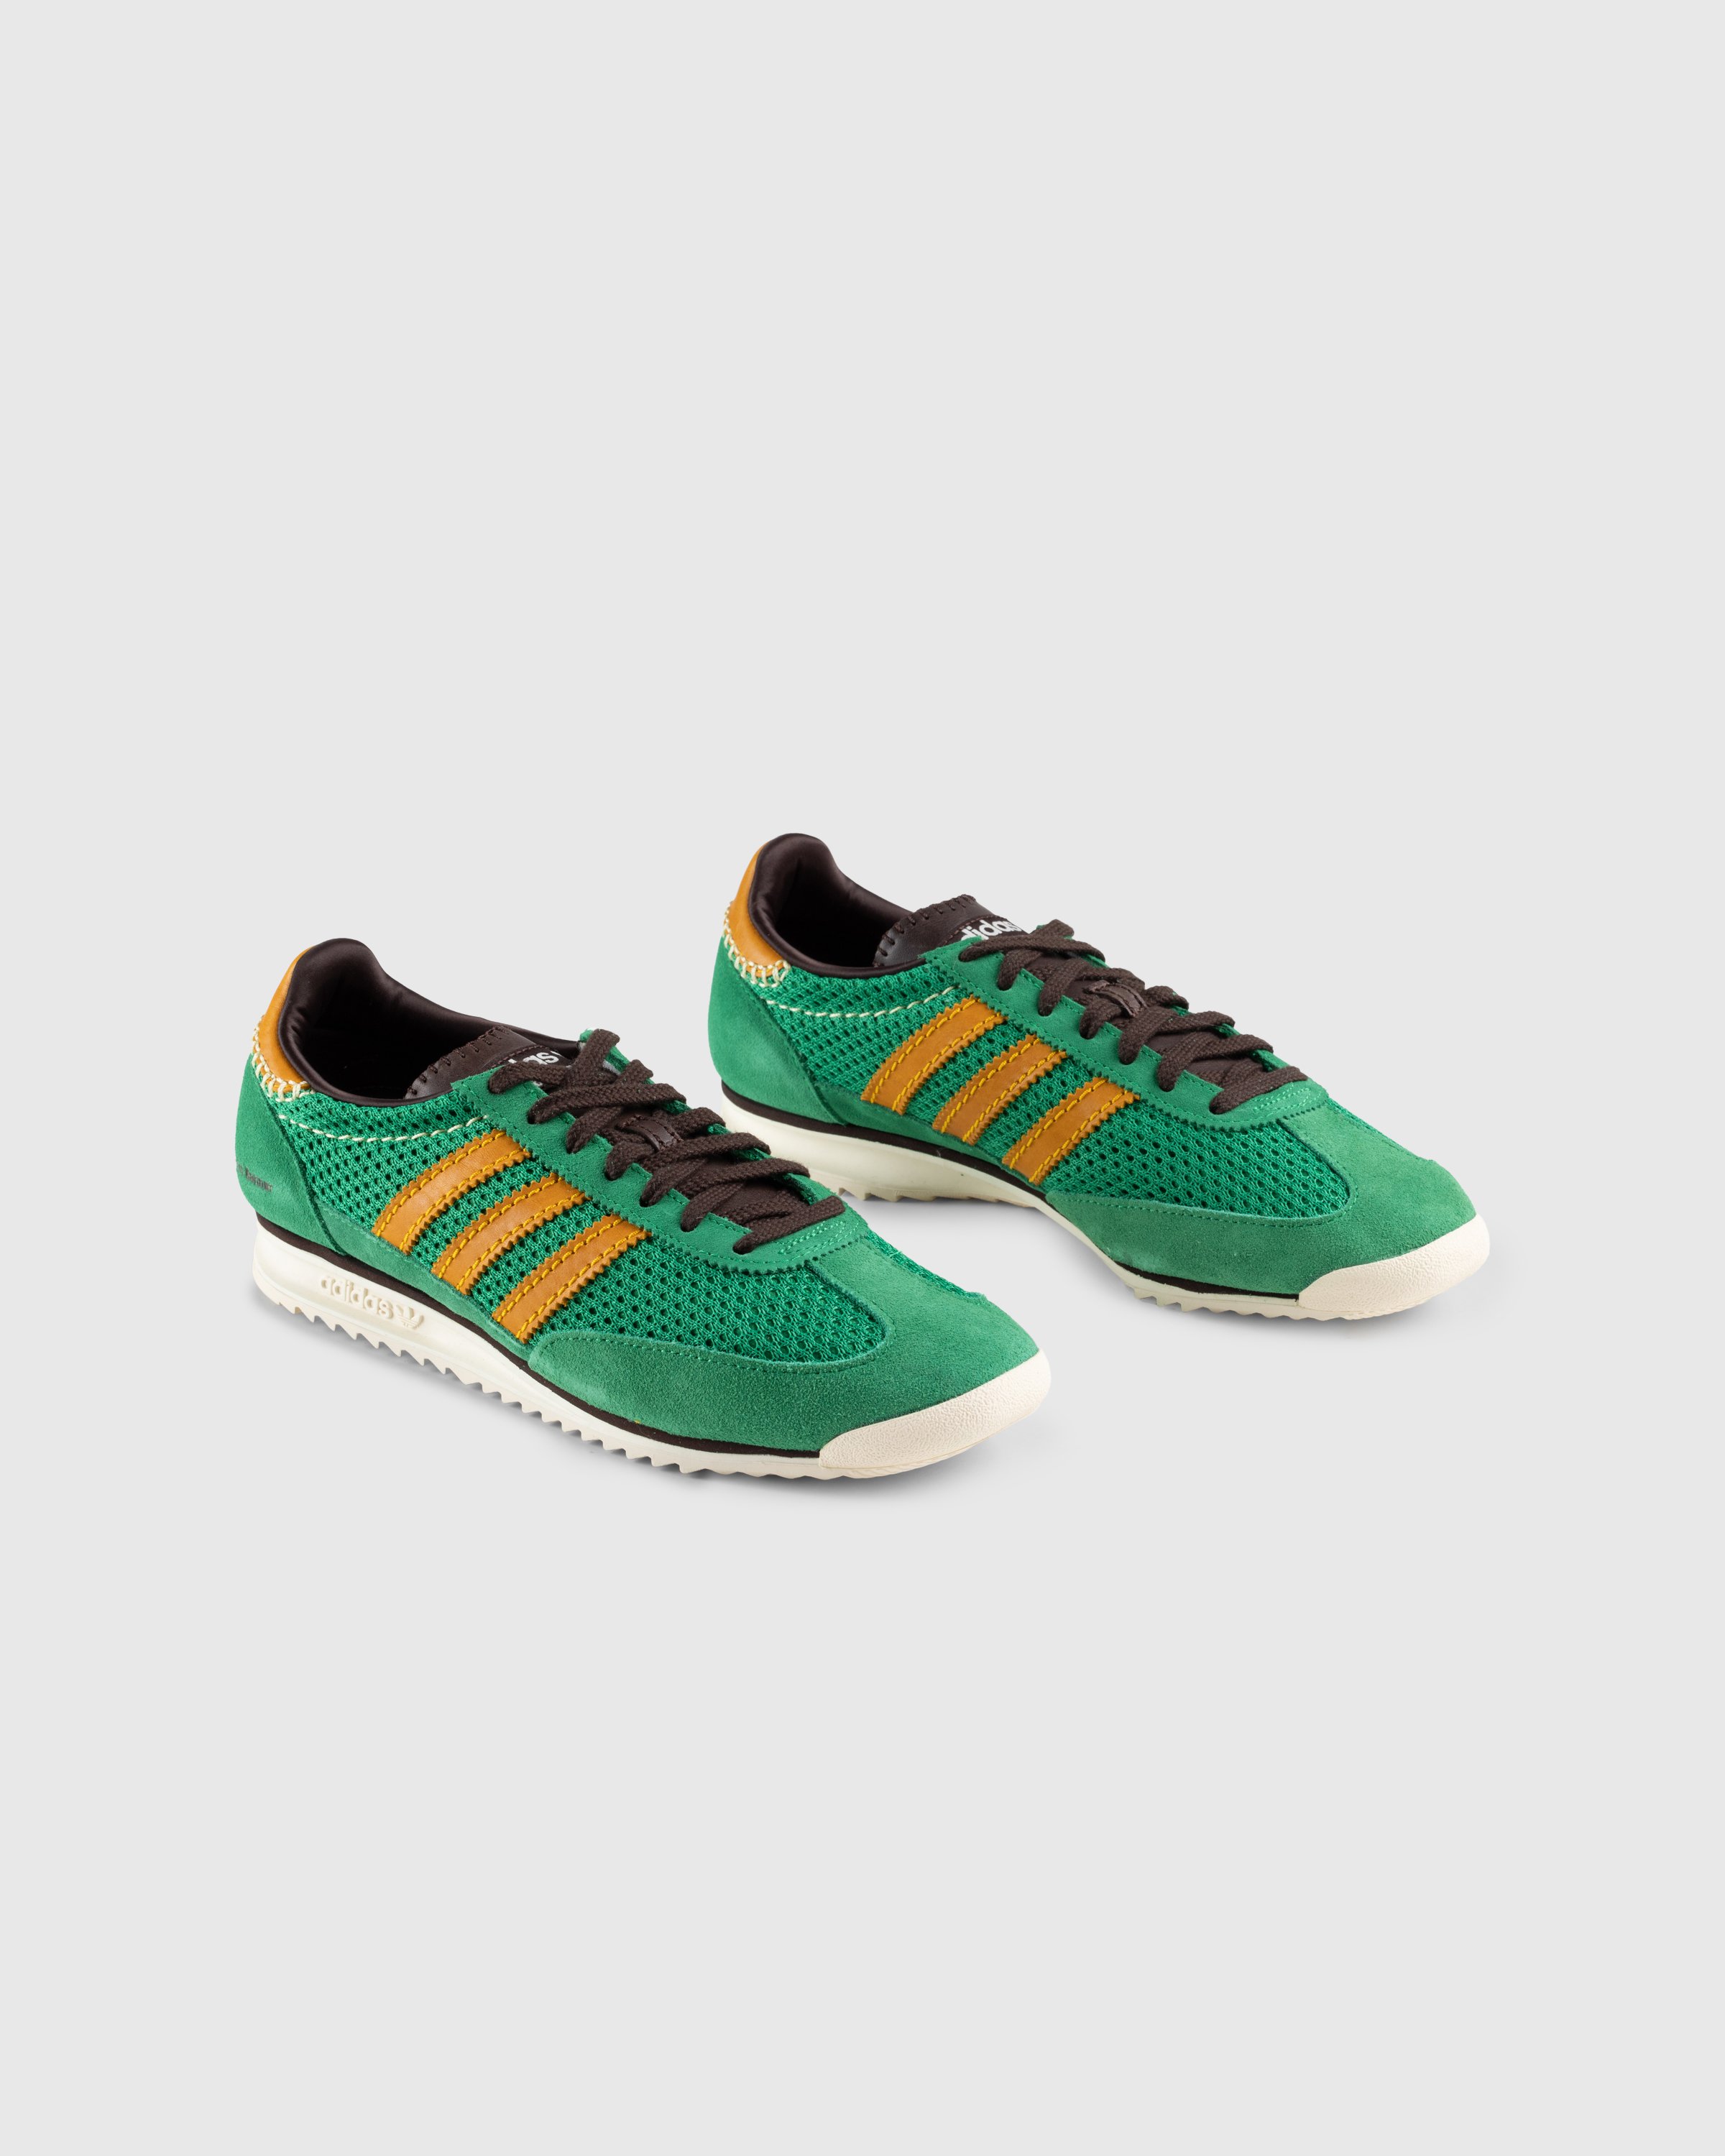 Adidas x Wales Bonner - SL72 Knit Team Green - Footwear - Green - Image 3